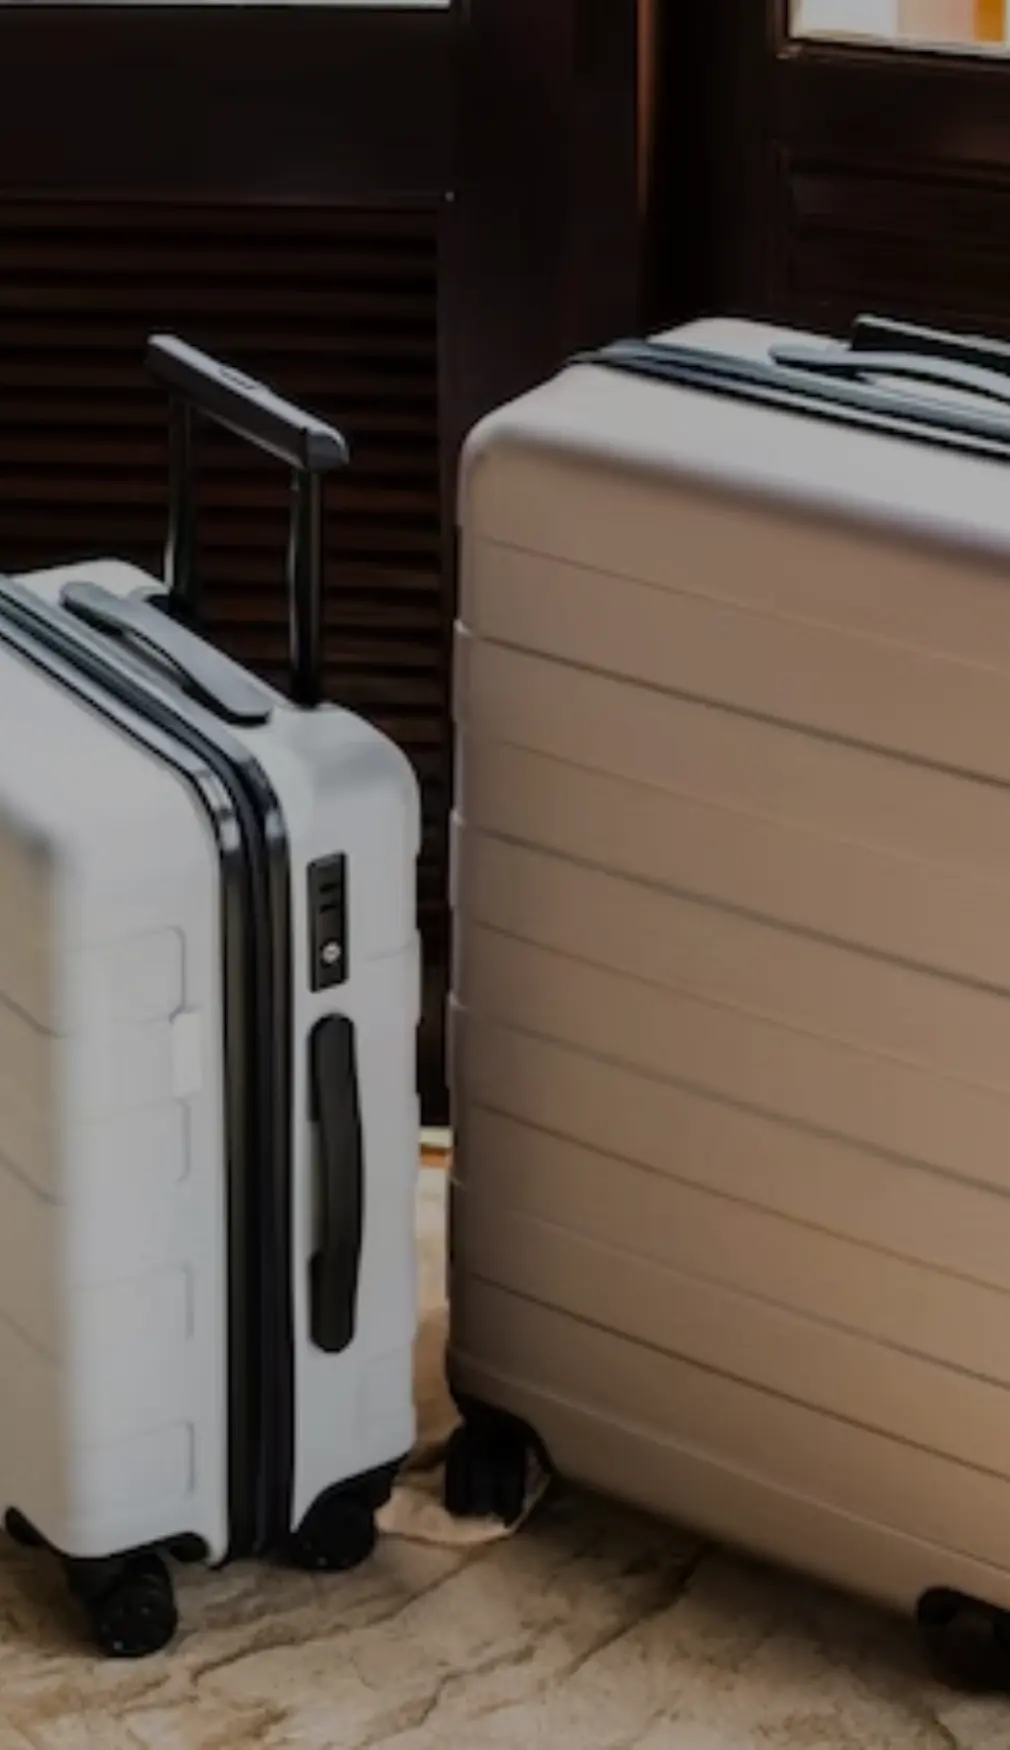 Explore Unbeatable Deals on Travel Suitcases Black Friday!